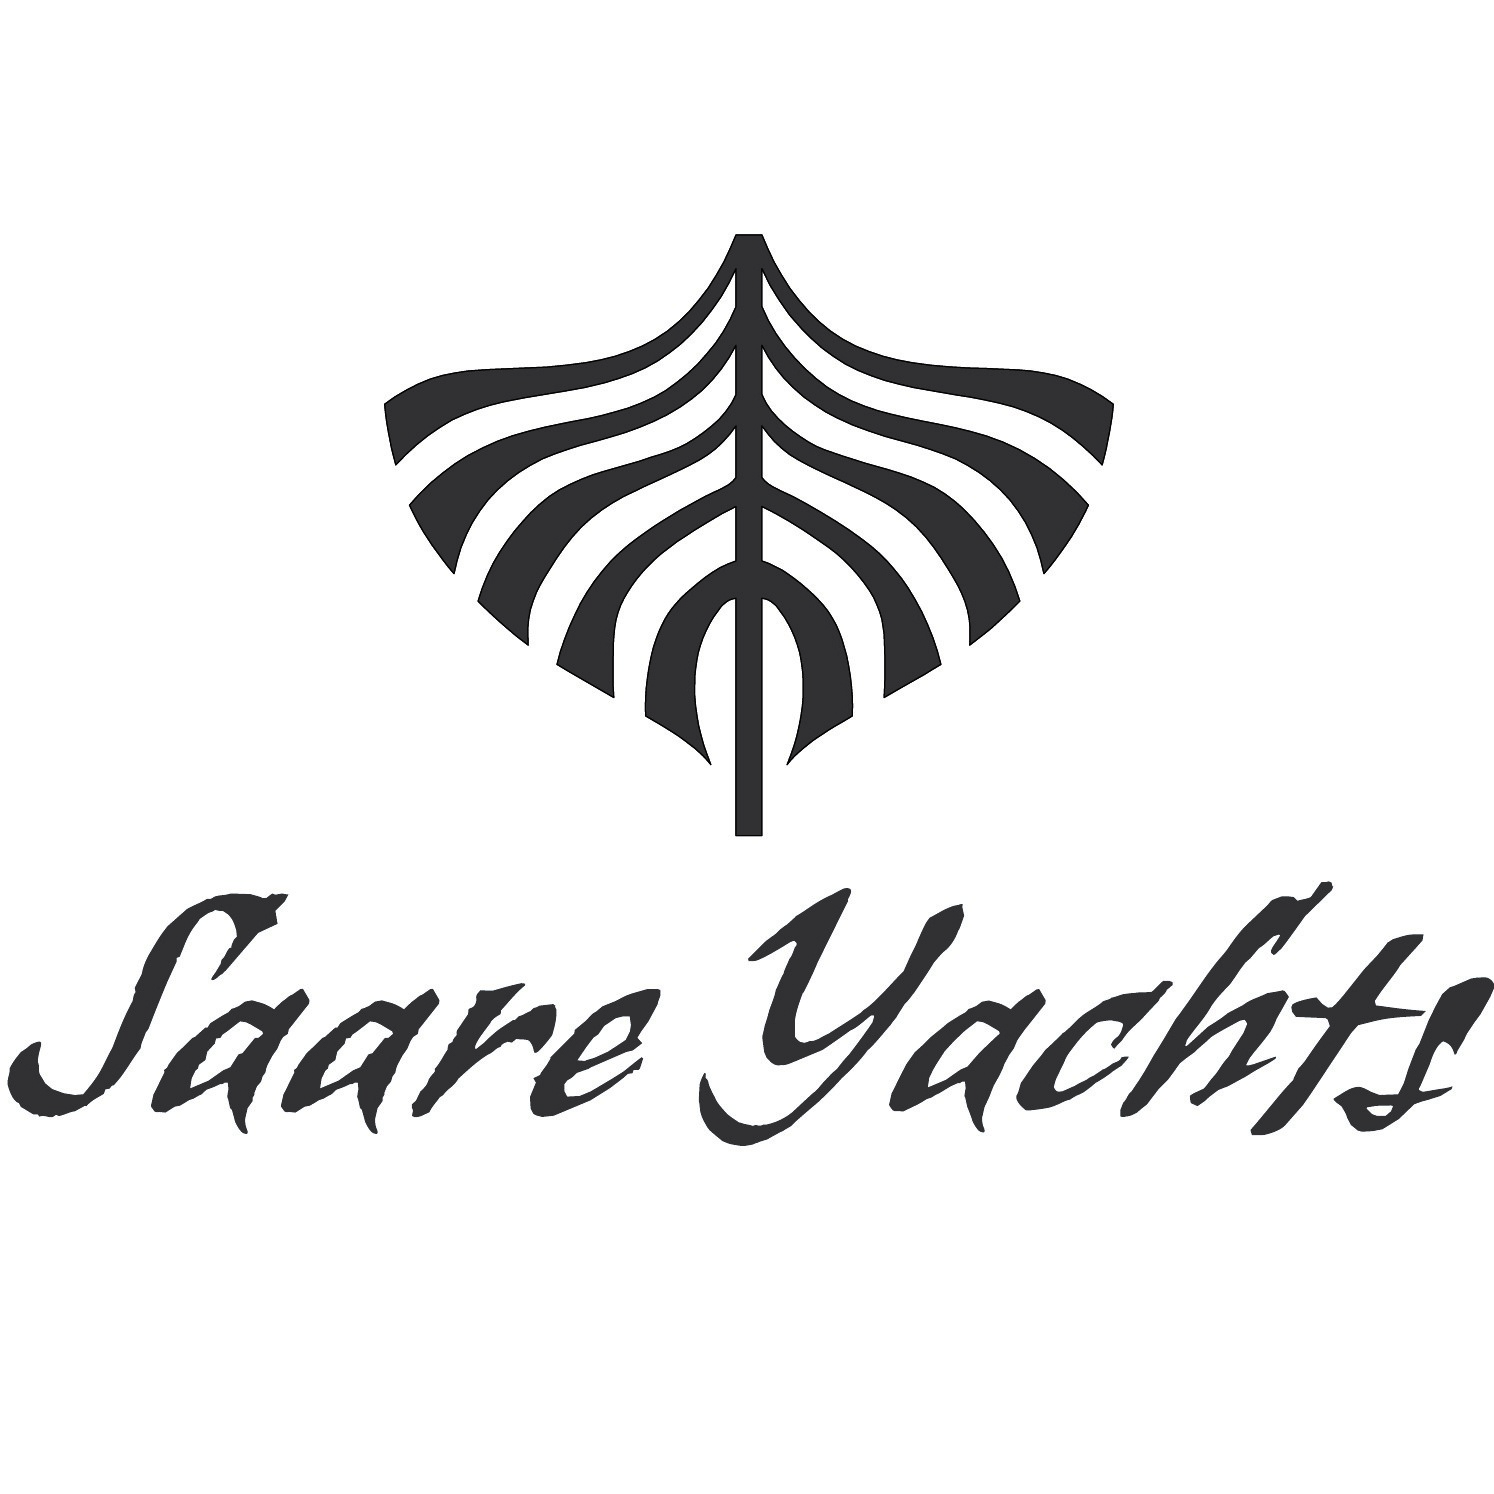 Saare Yachts logo models 201812